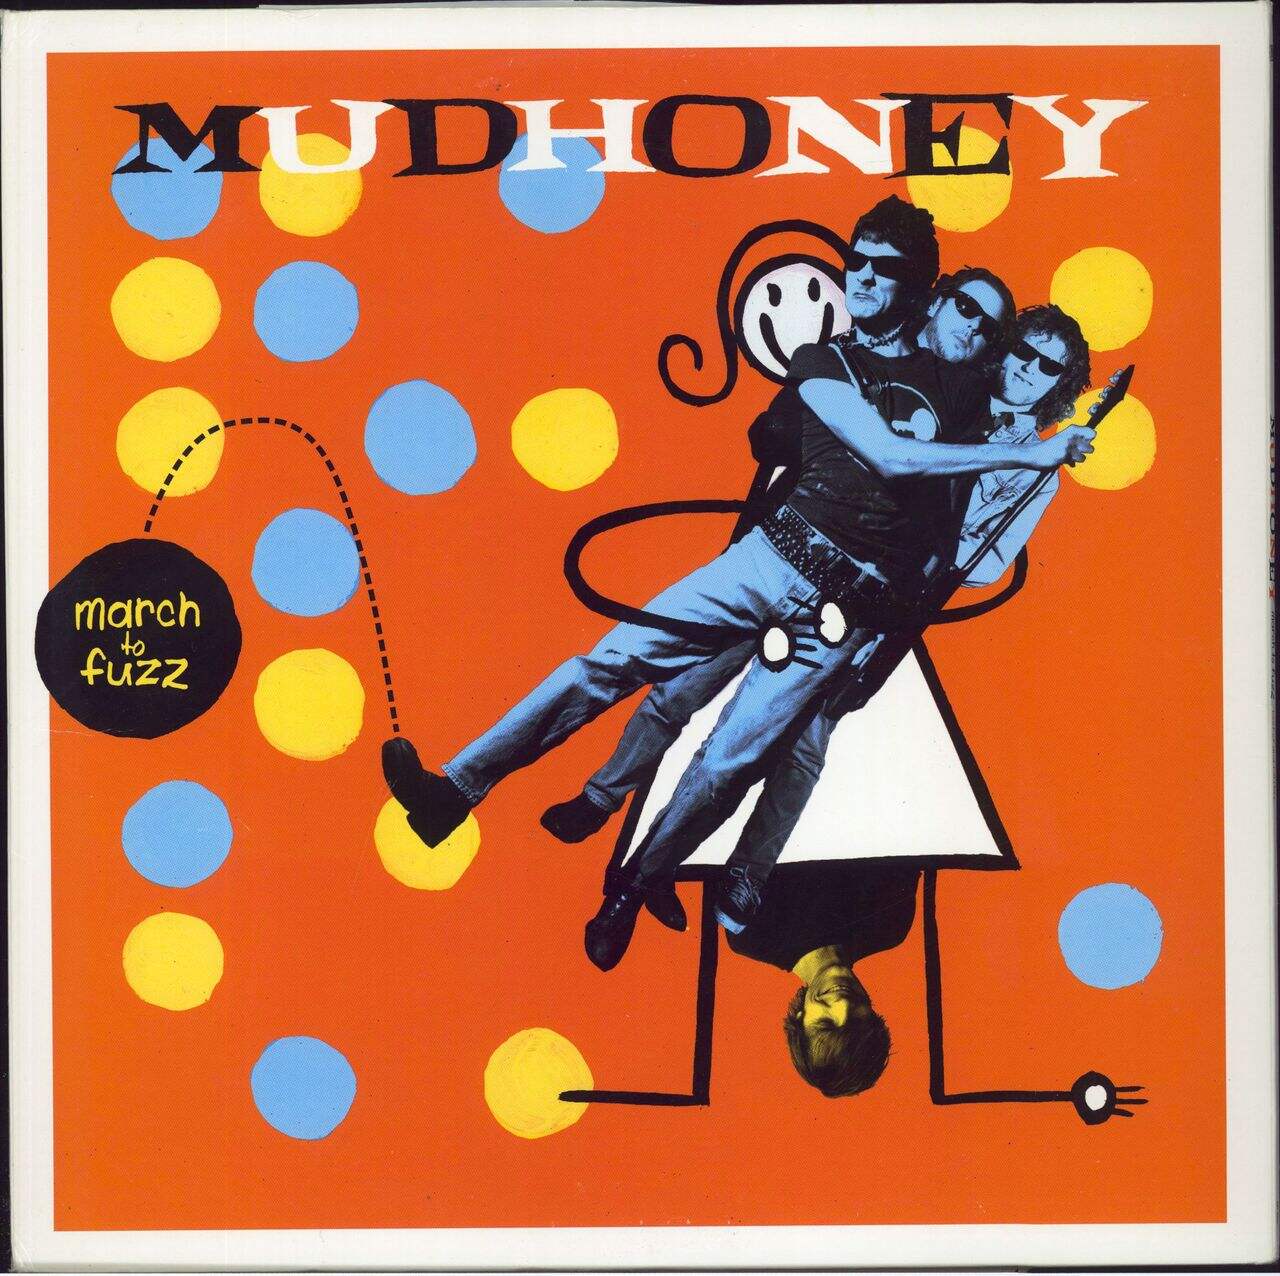 Mudhoney March To Fuzz US 3-LP vinyl set